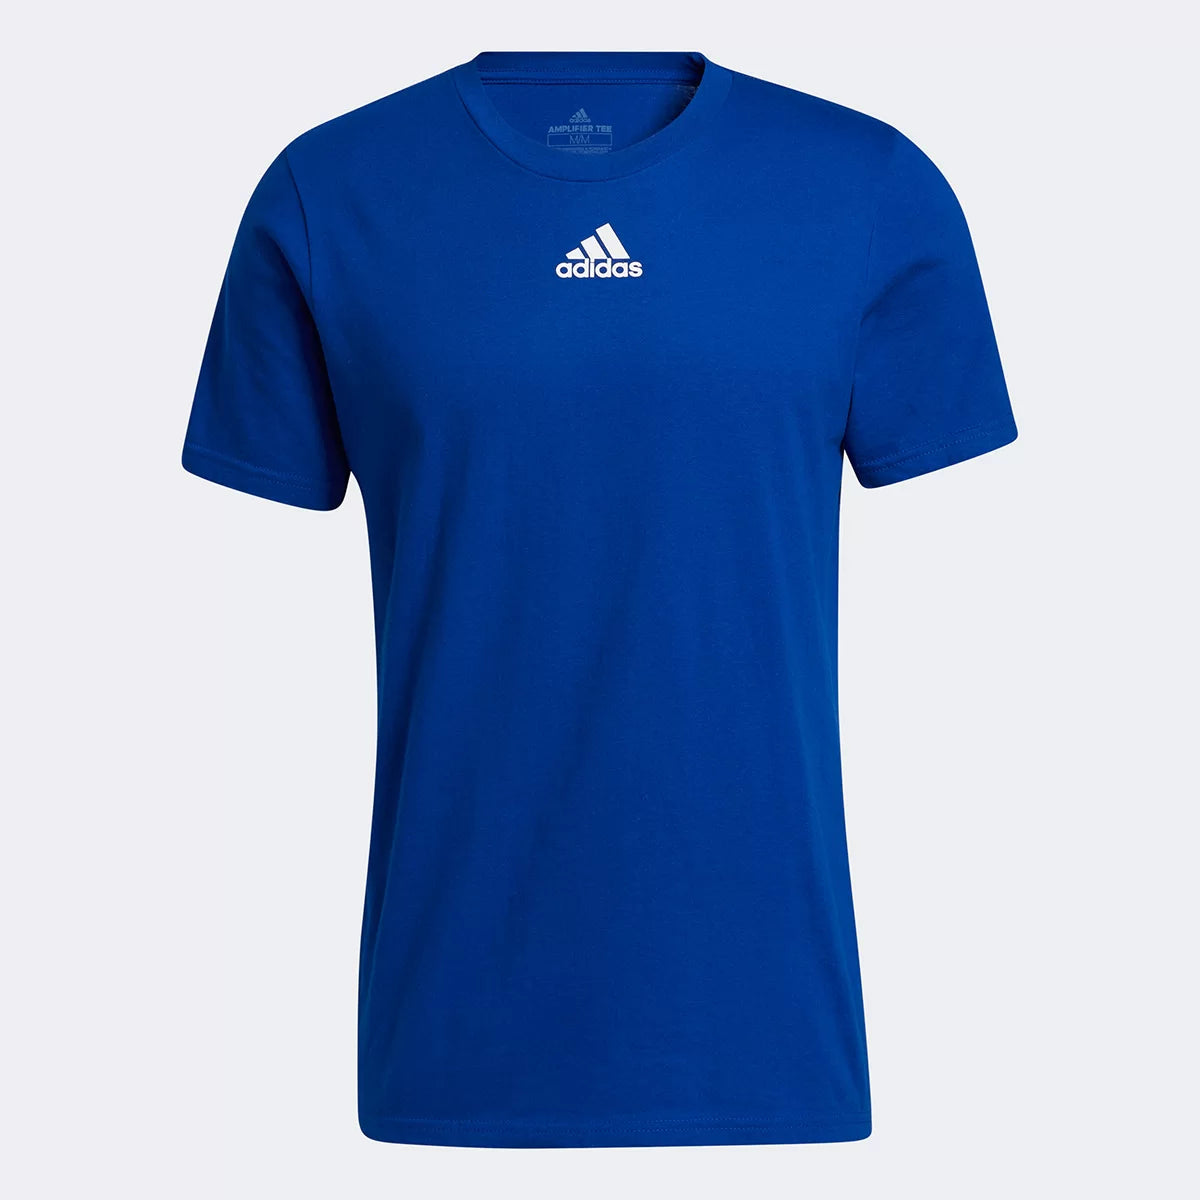 Camiseta Adidas Small Logo Team Royal Blue